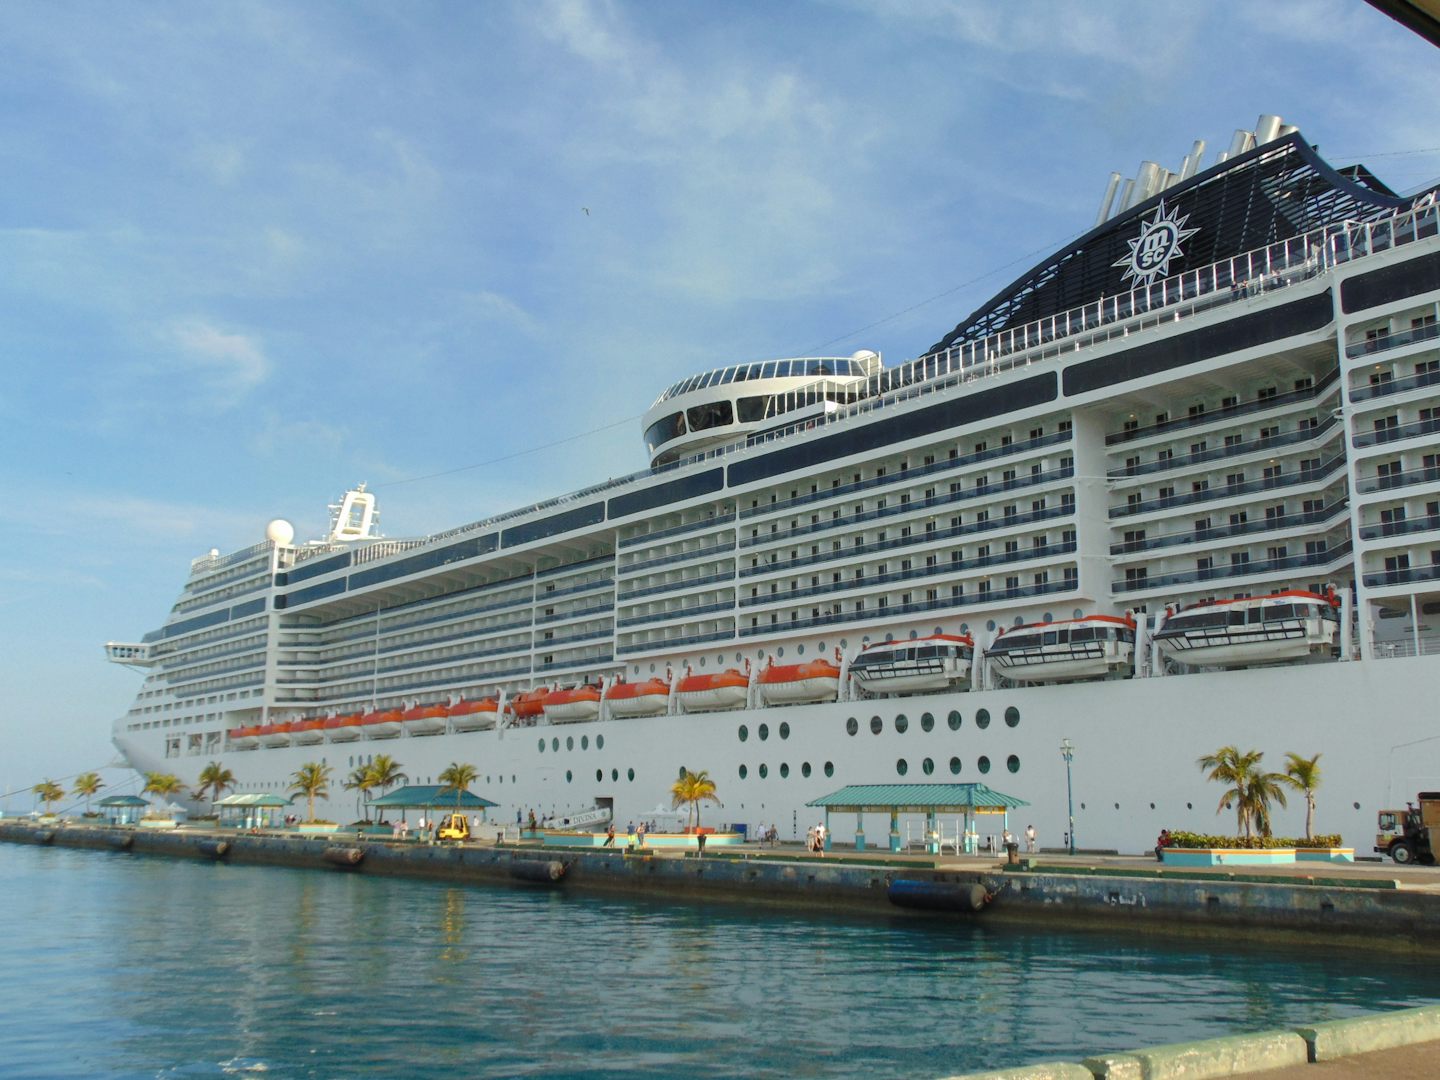 MSC Divina docked in Bahamas